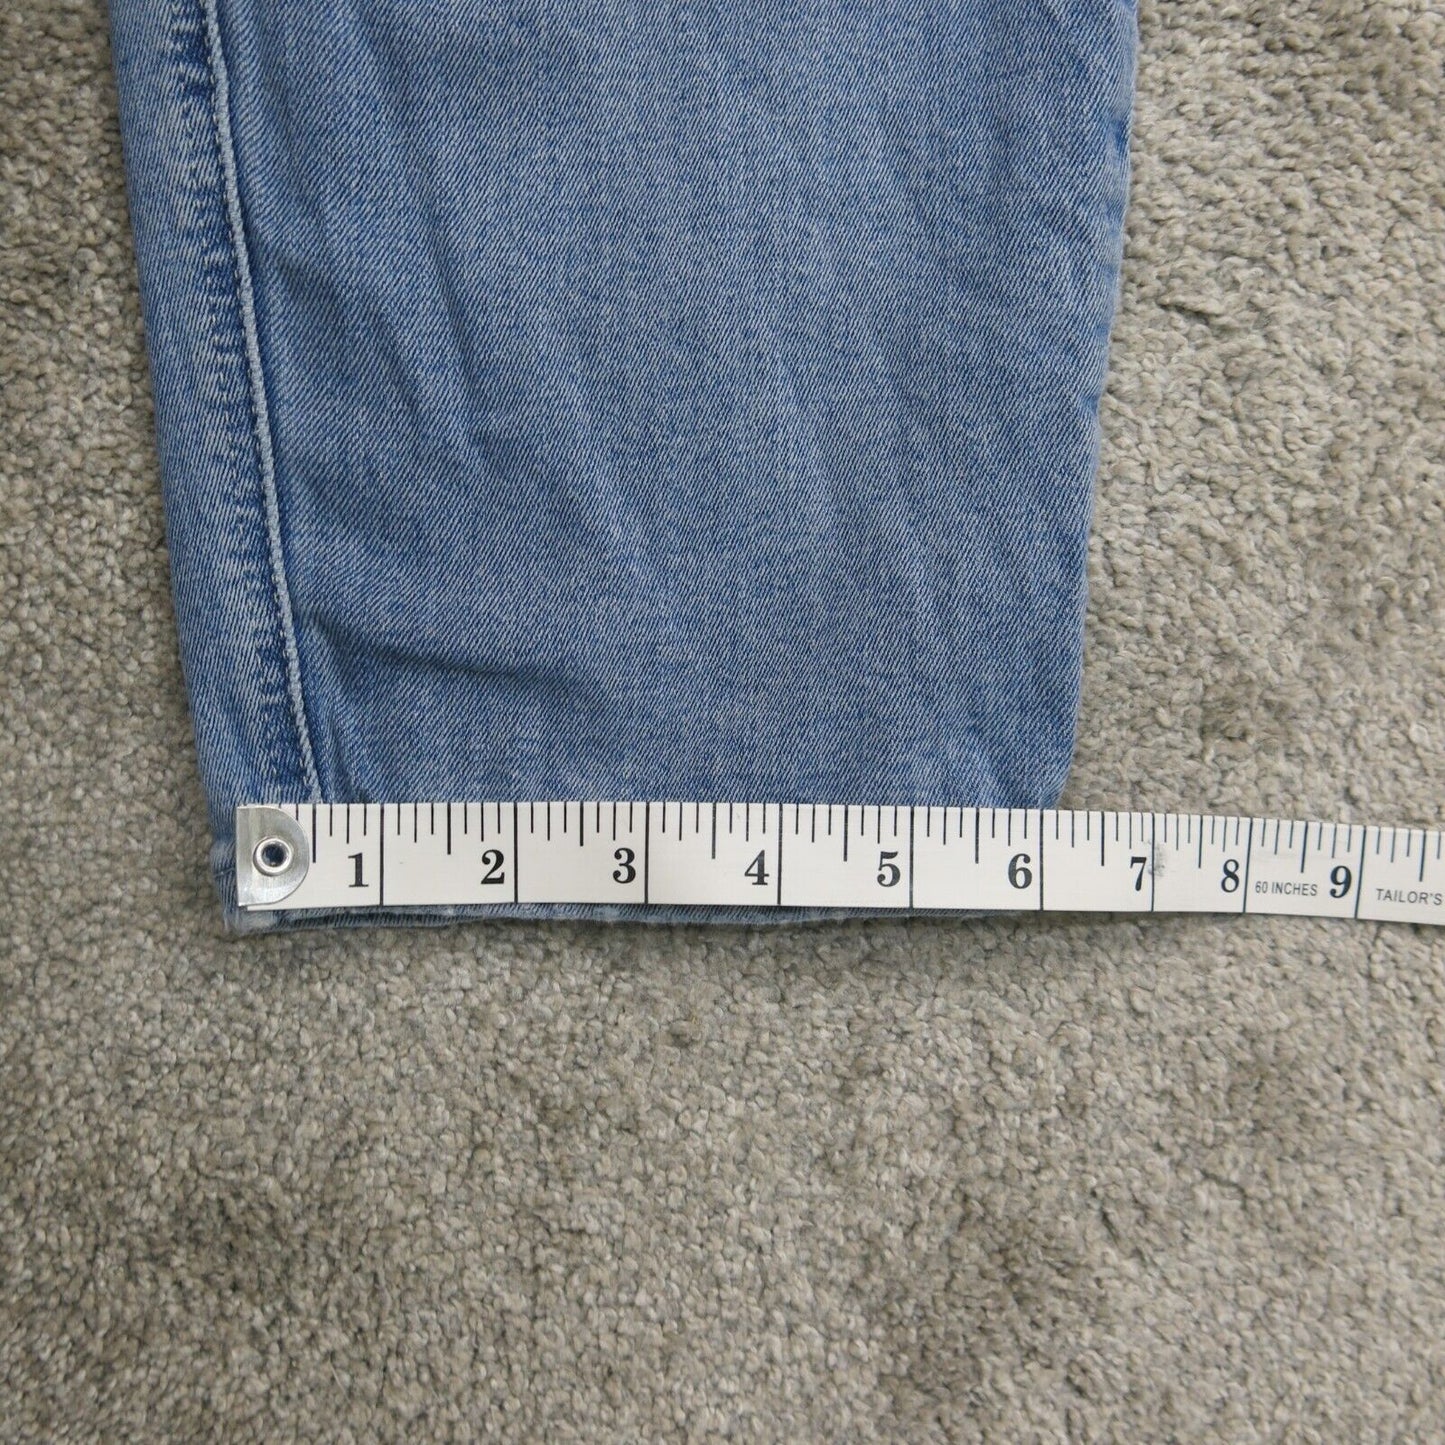 LEVI STRAUSS Signature Women Jeans Mid Rise Utility Slim Crop Straight Leg W29